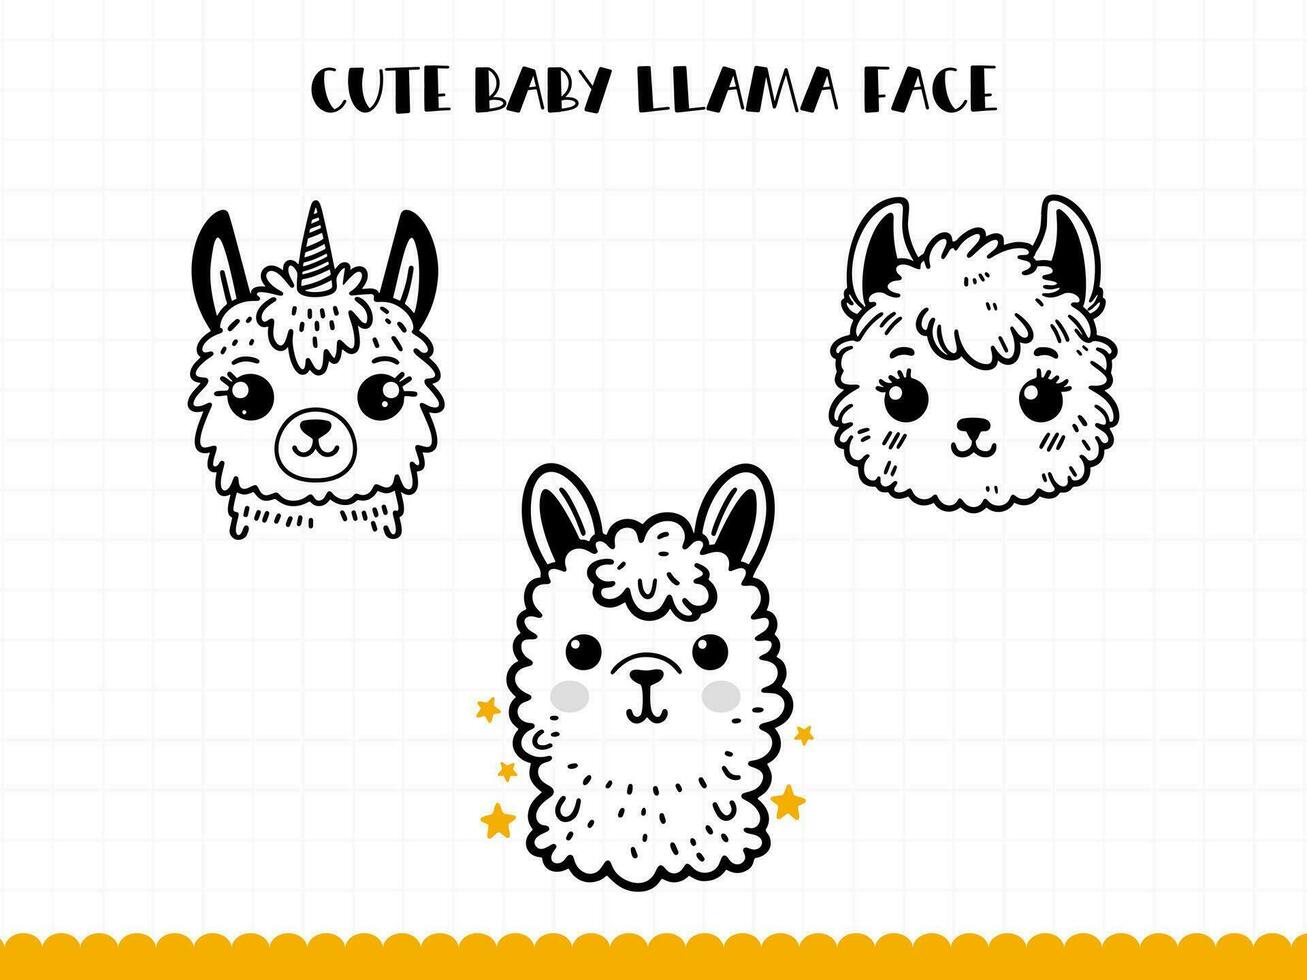 Cute llama face in simple doodle style set. Vector illustration.